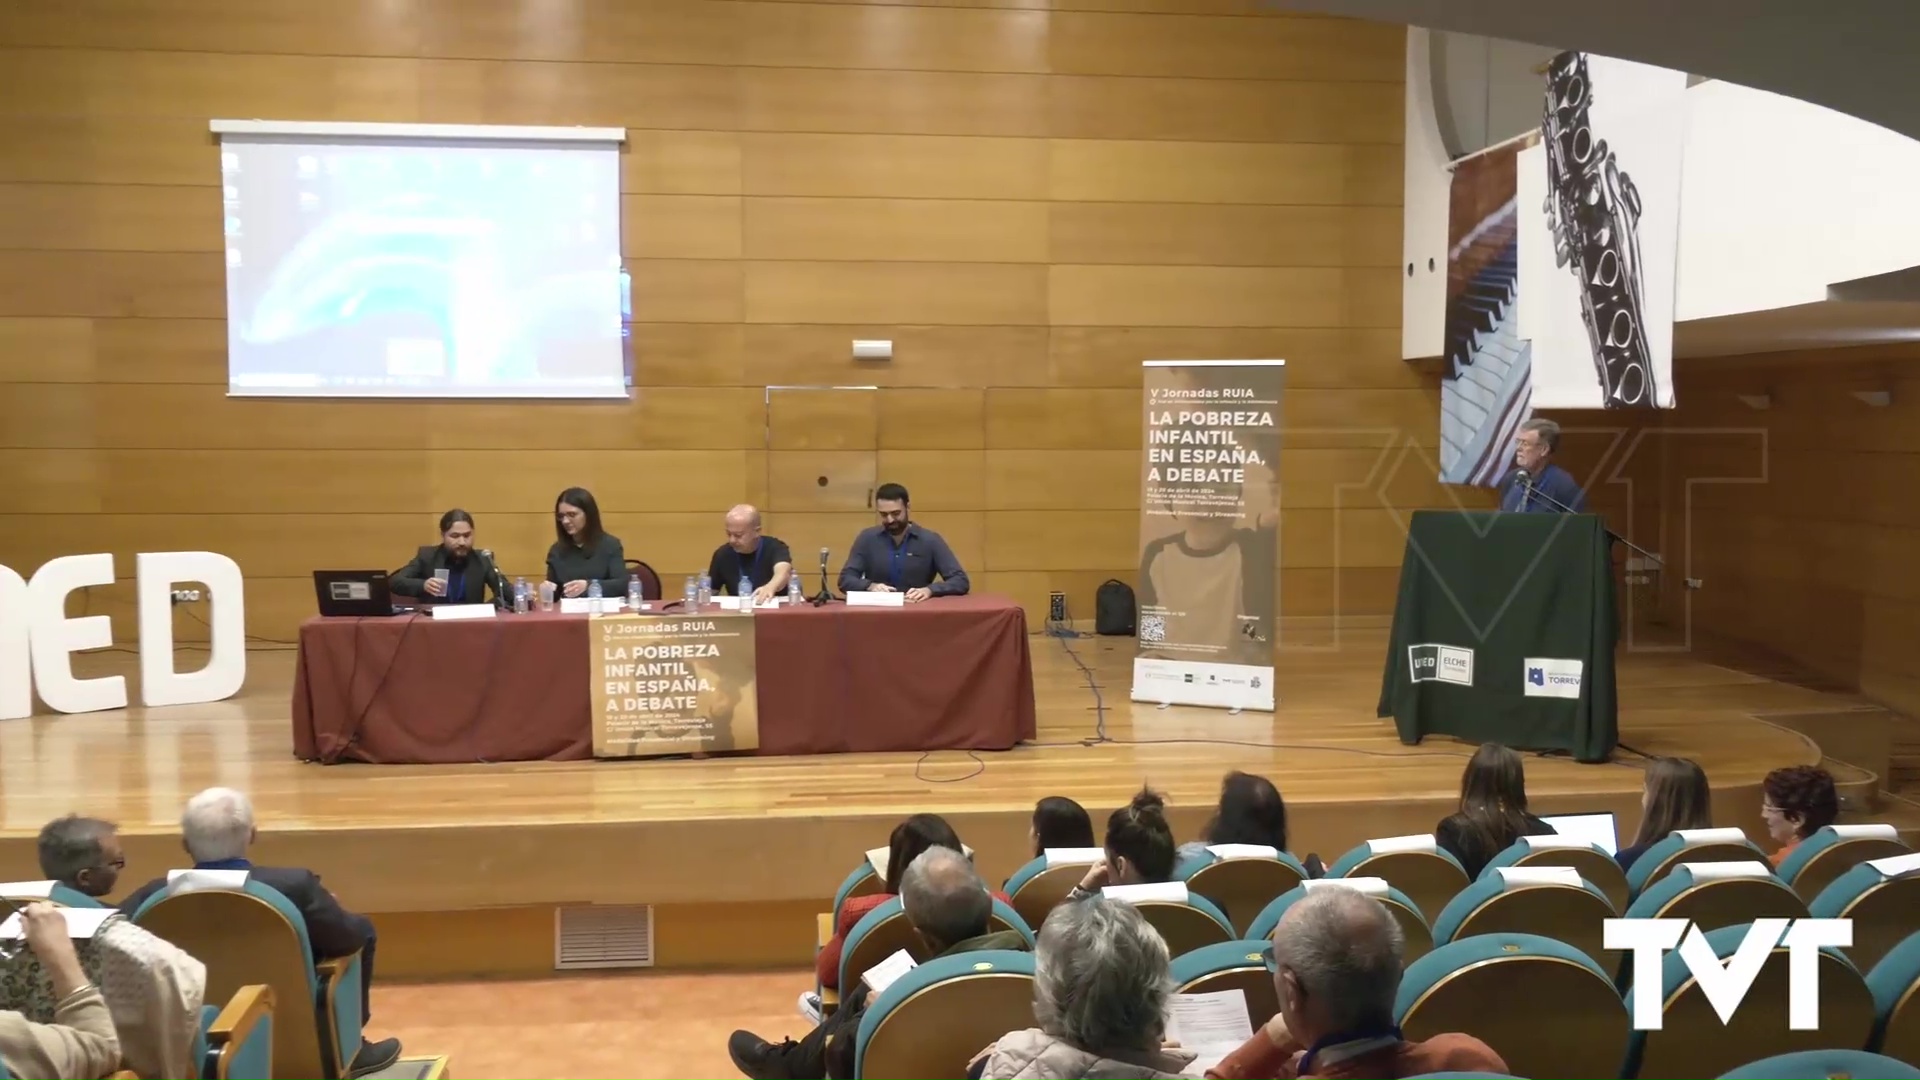 La pobreza infantil en España, a debate - V Jornadas RUIA - Tercera Mesa Redonda